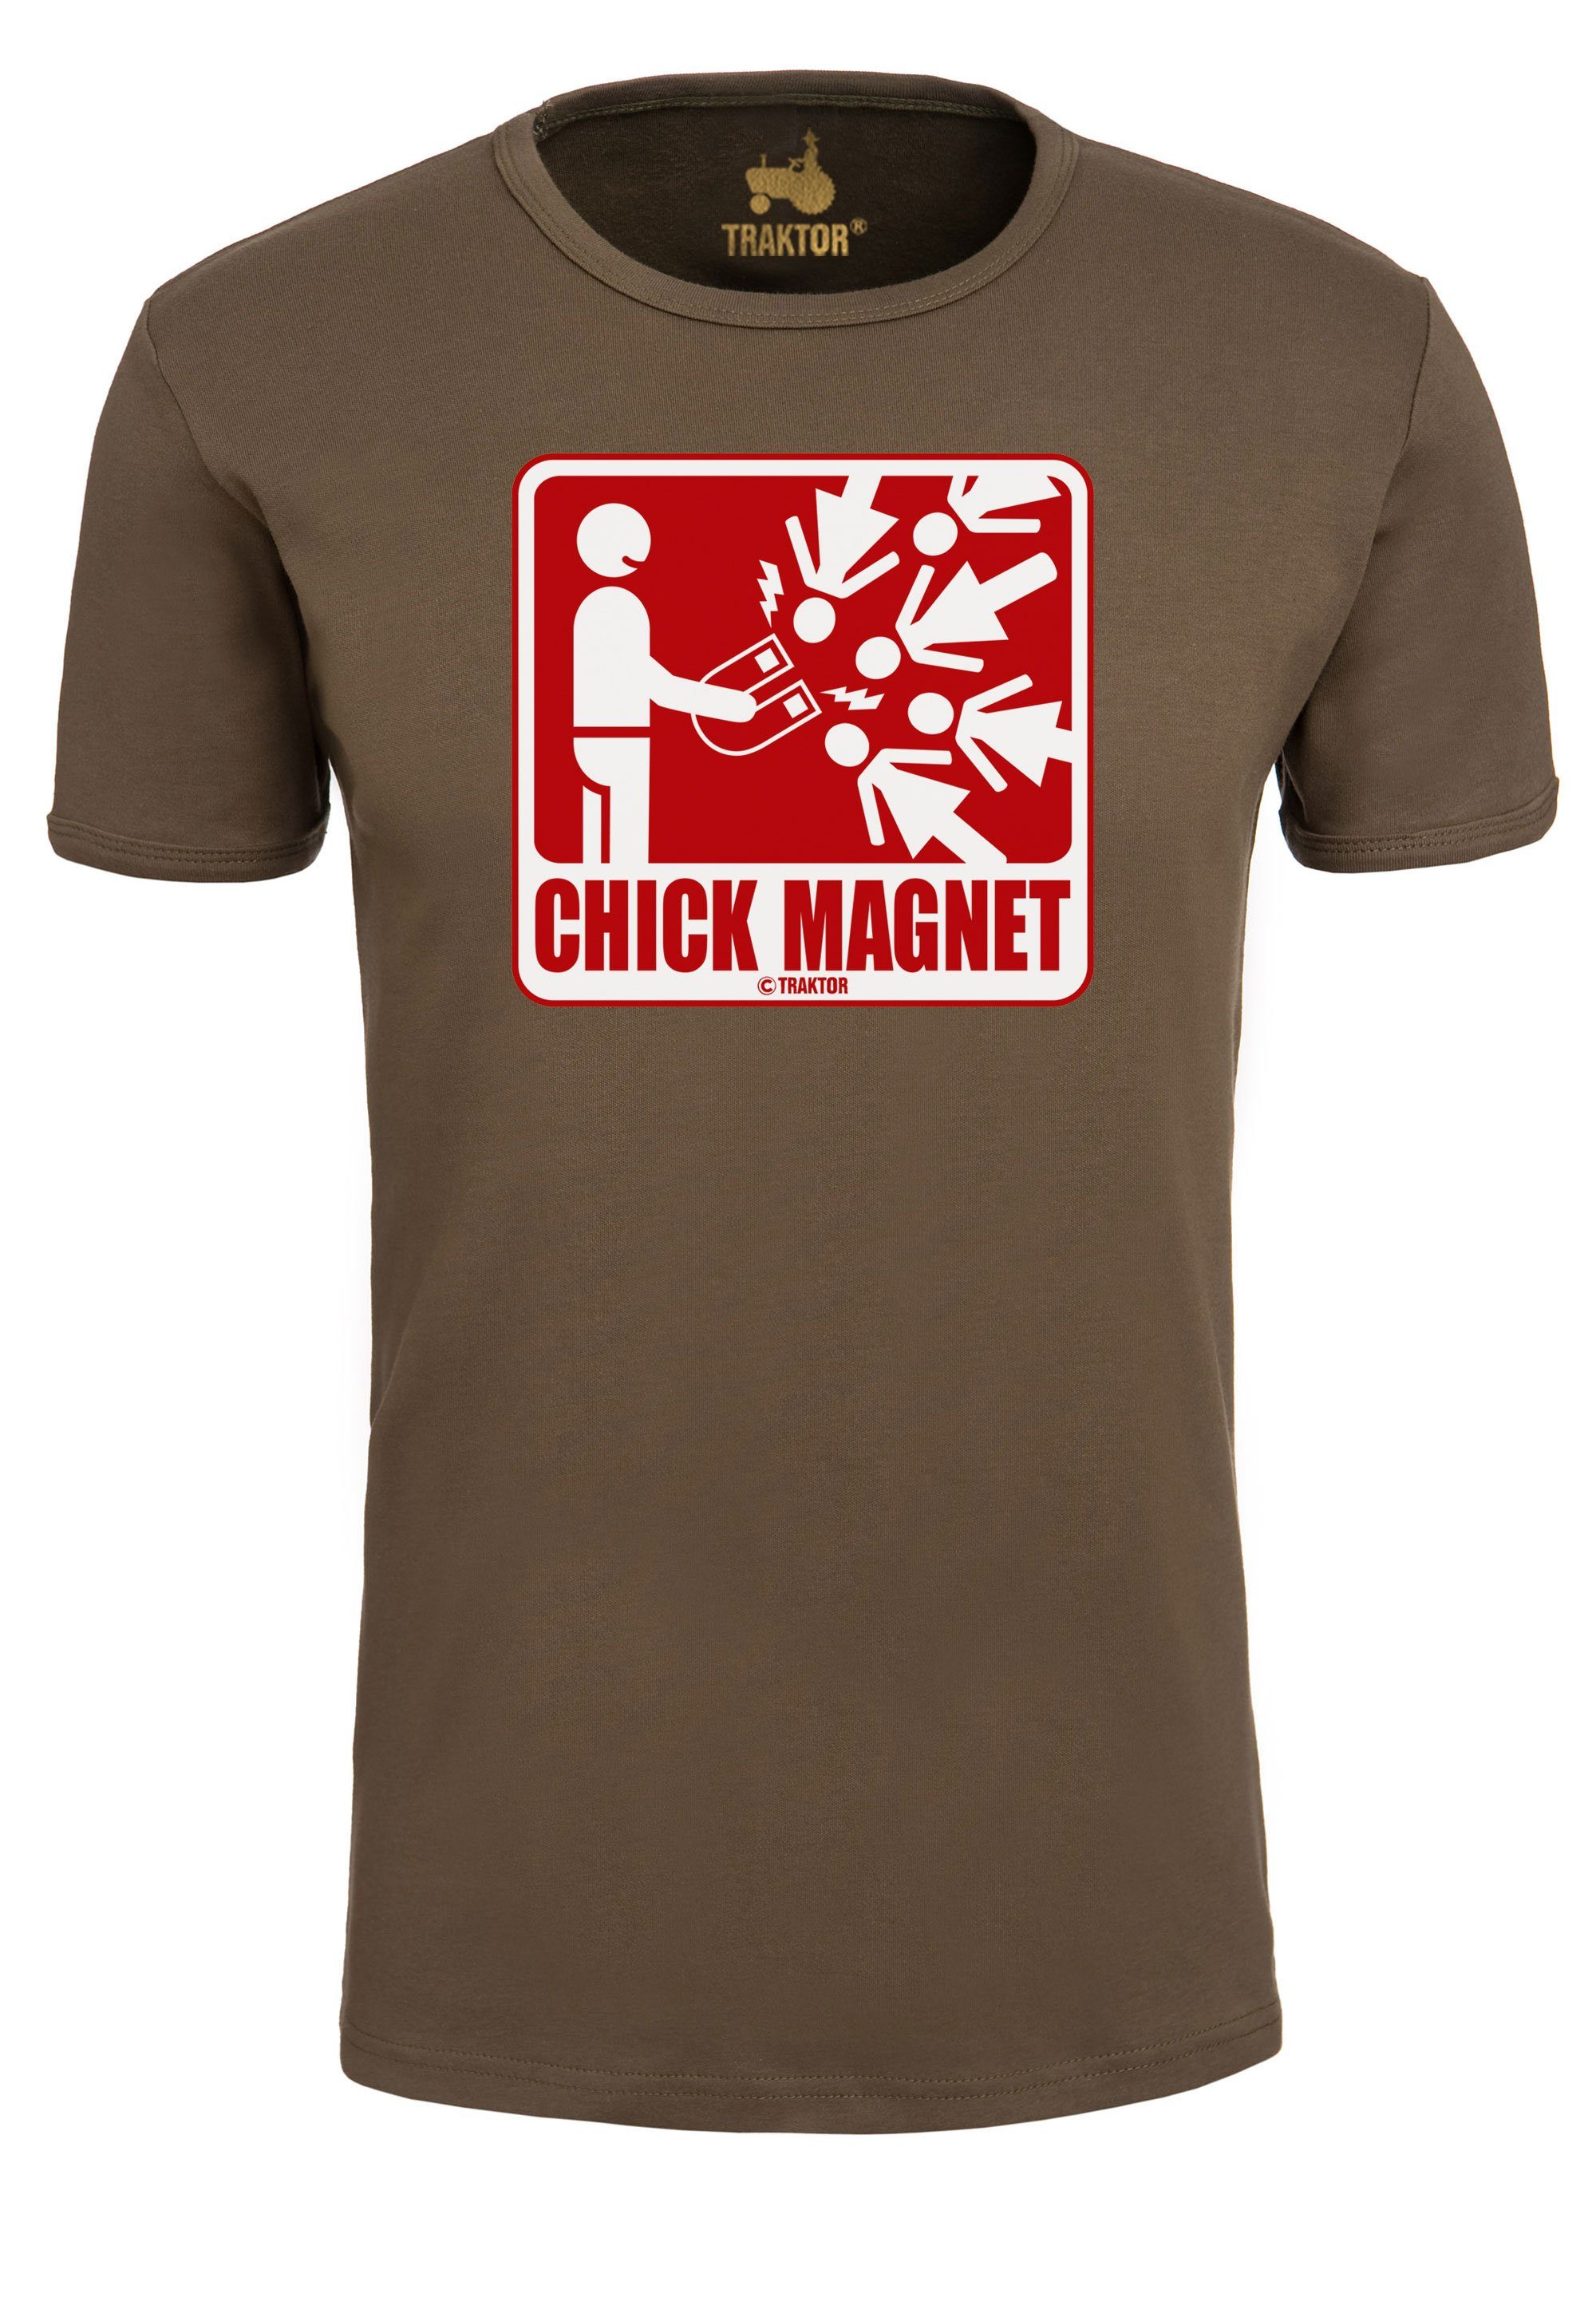 LOGOSHIRT T-Shirt Chick olivgrün Print Magnet lustigem mit